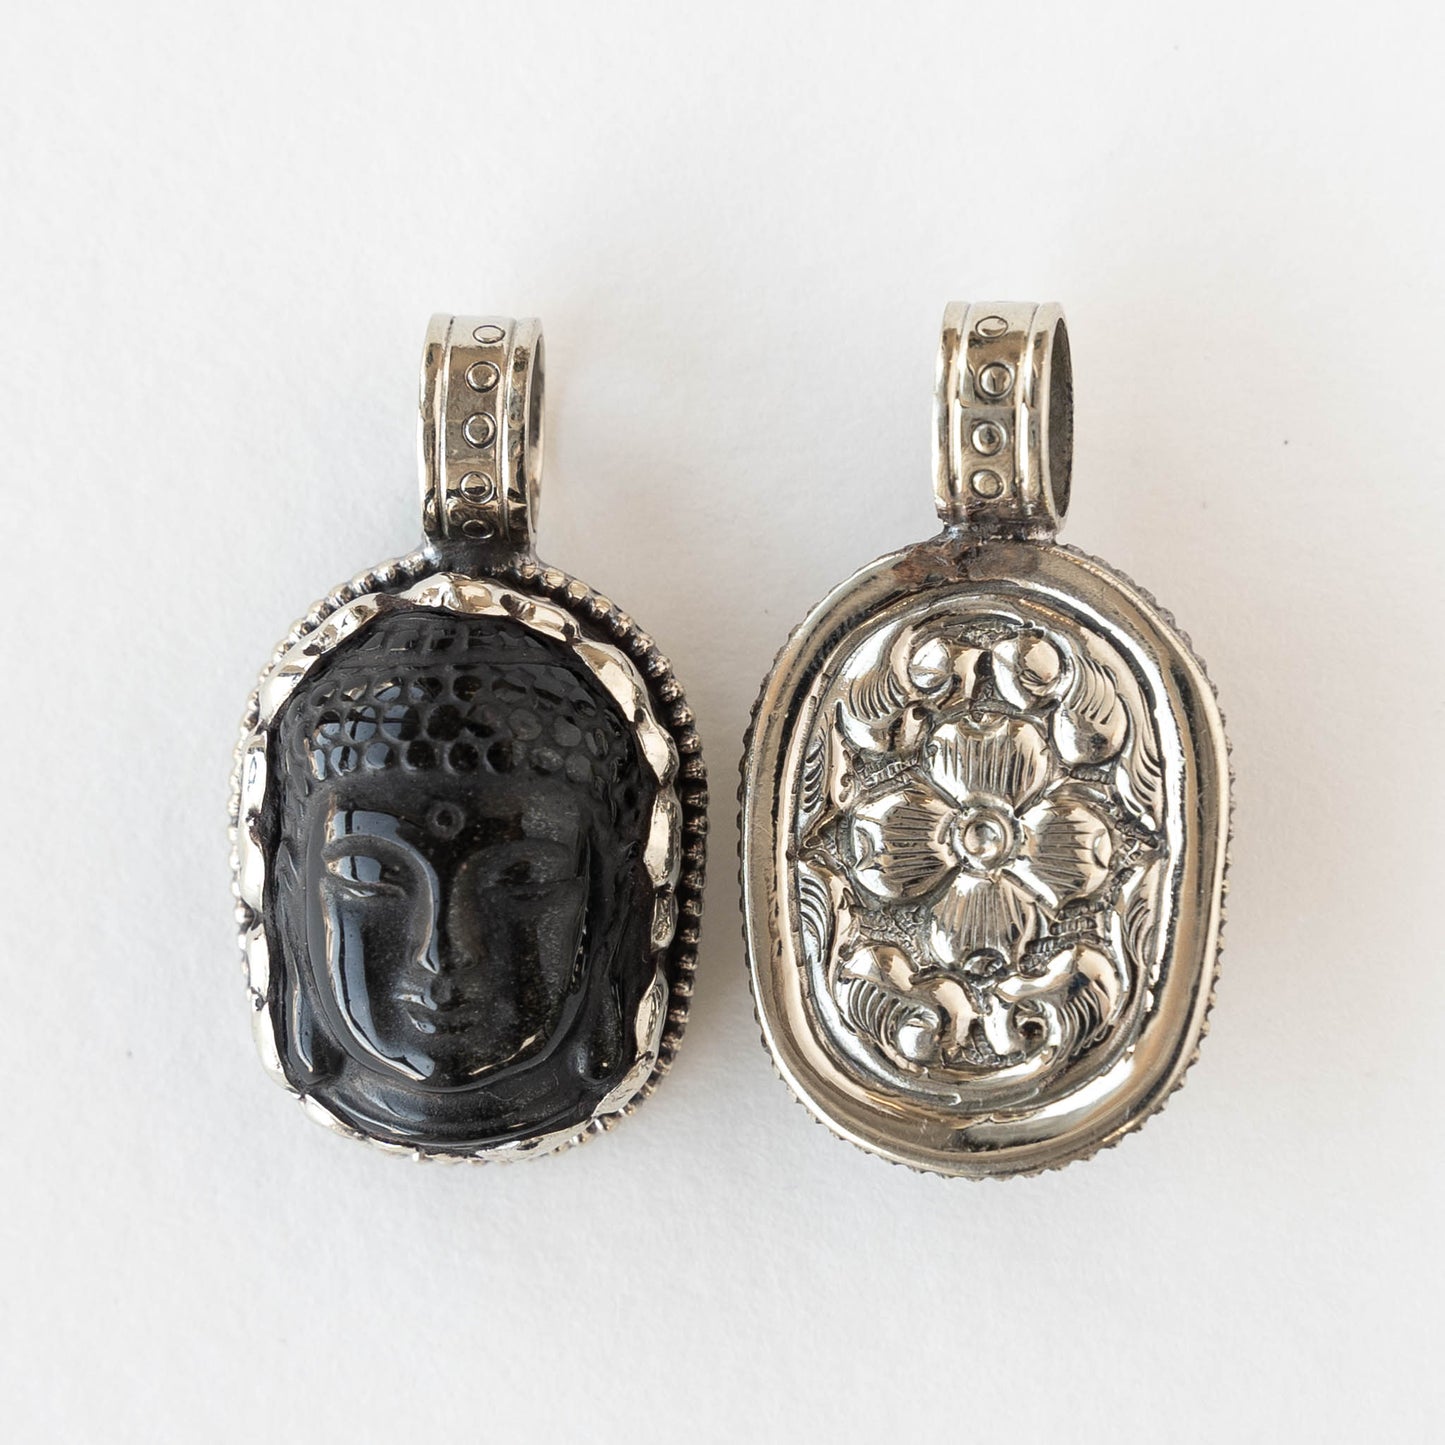 19mm Buddha Pendant - Black Matte Obsidian set in Tibetan Silver -  1 piece